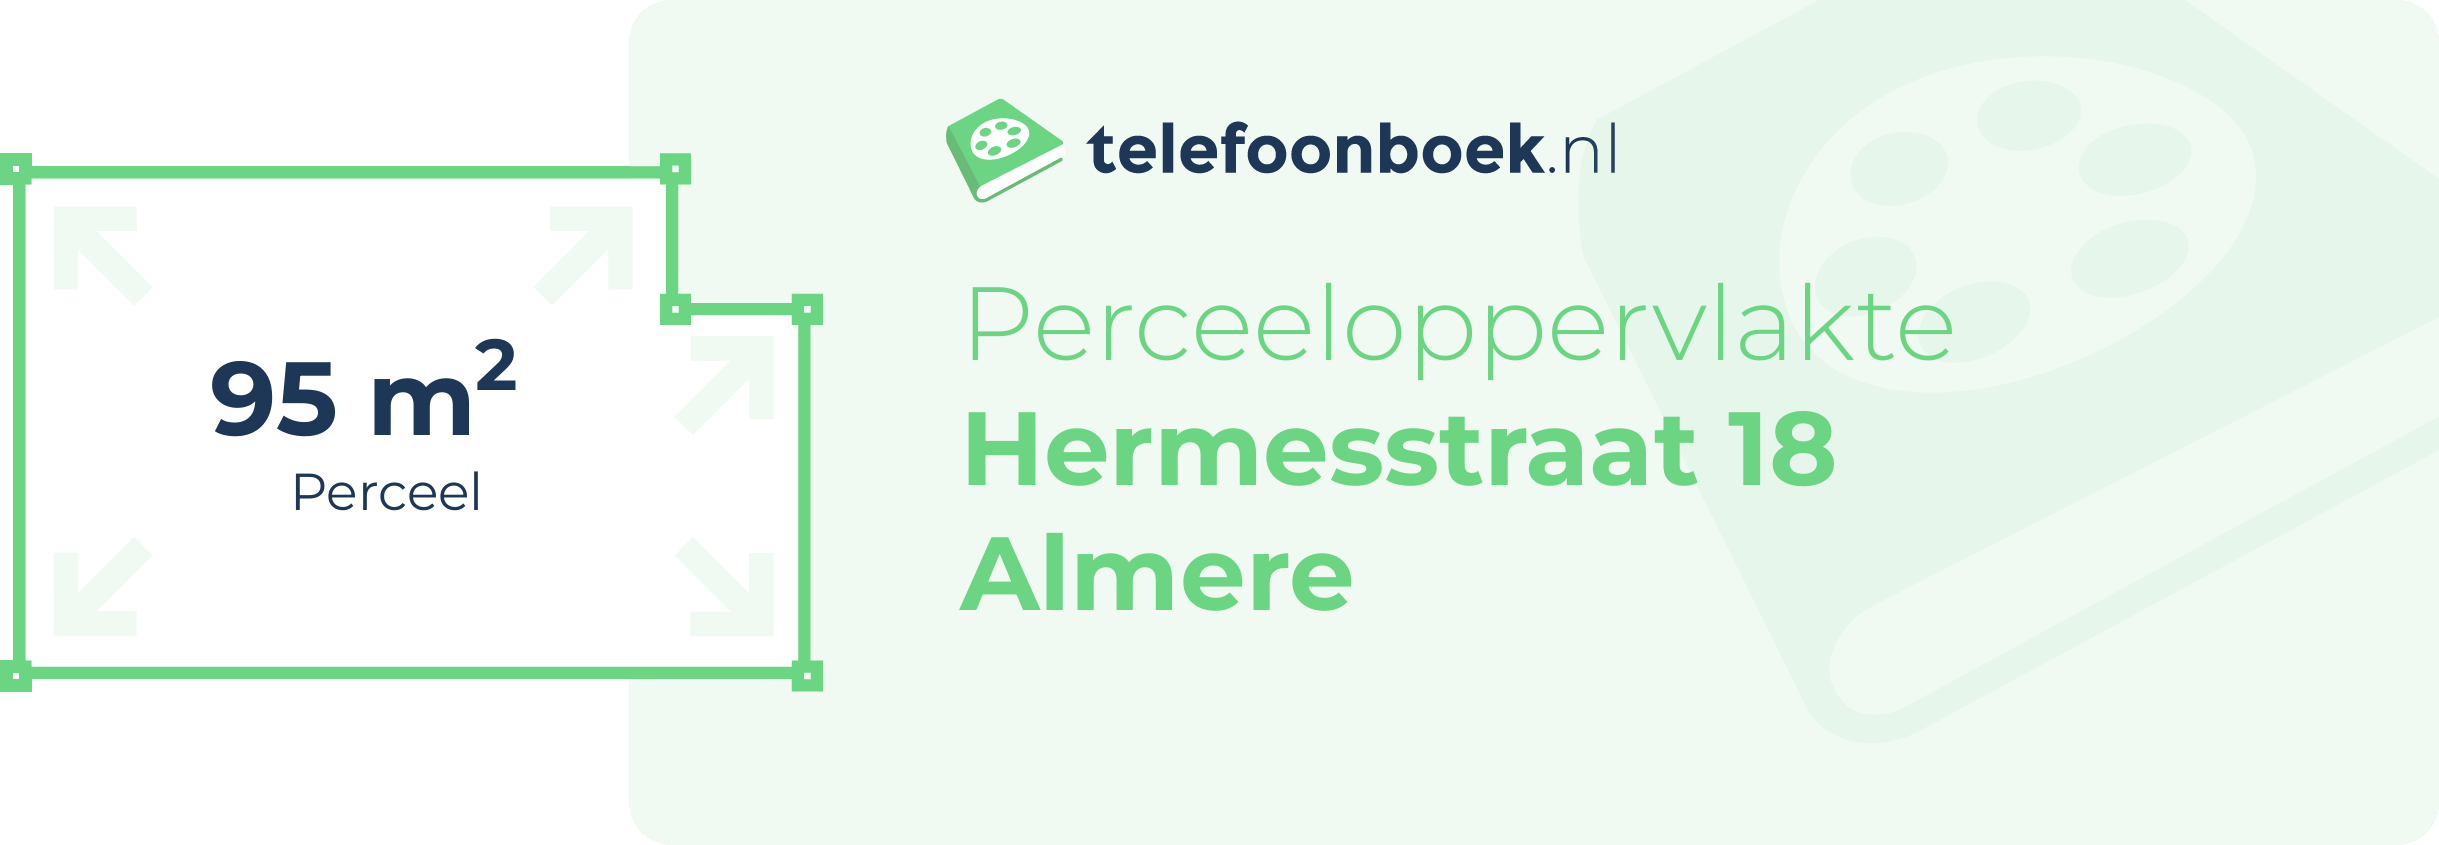 Perceeloppervlakte Hermesstraat 18 Almere